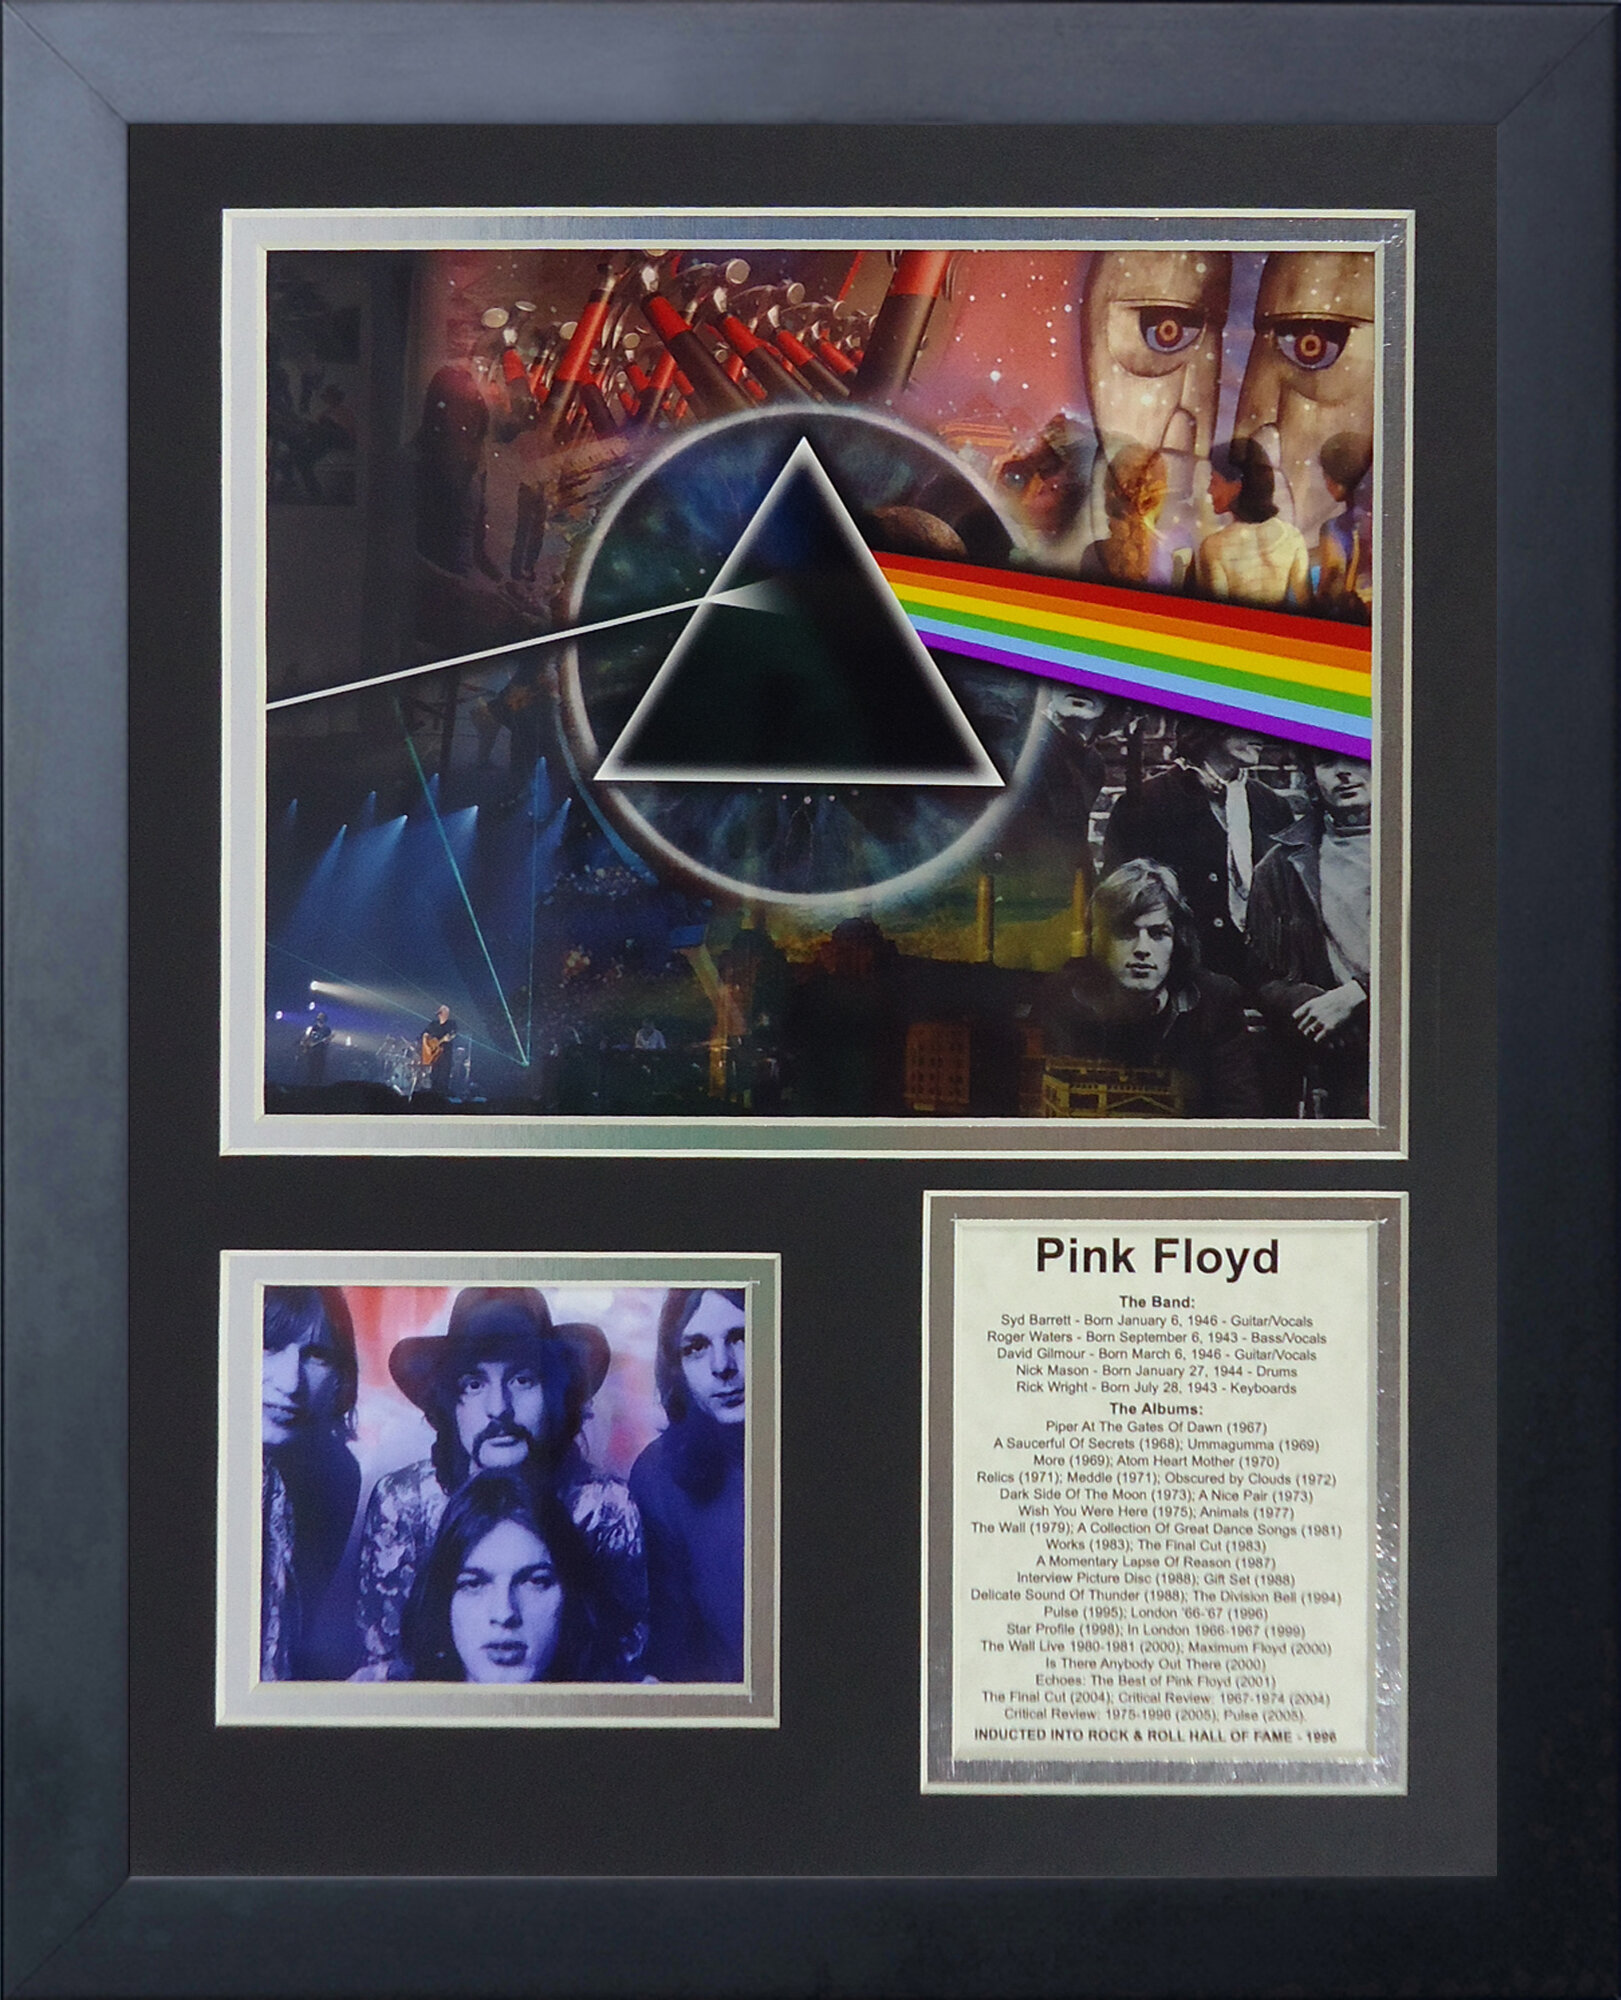 Pink Floyd (The Final Cut) Album Cover Framed Print